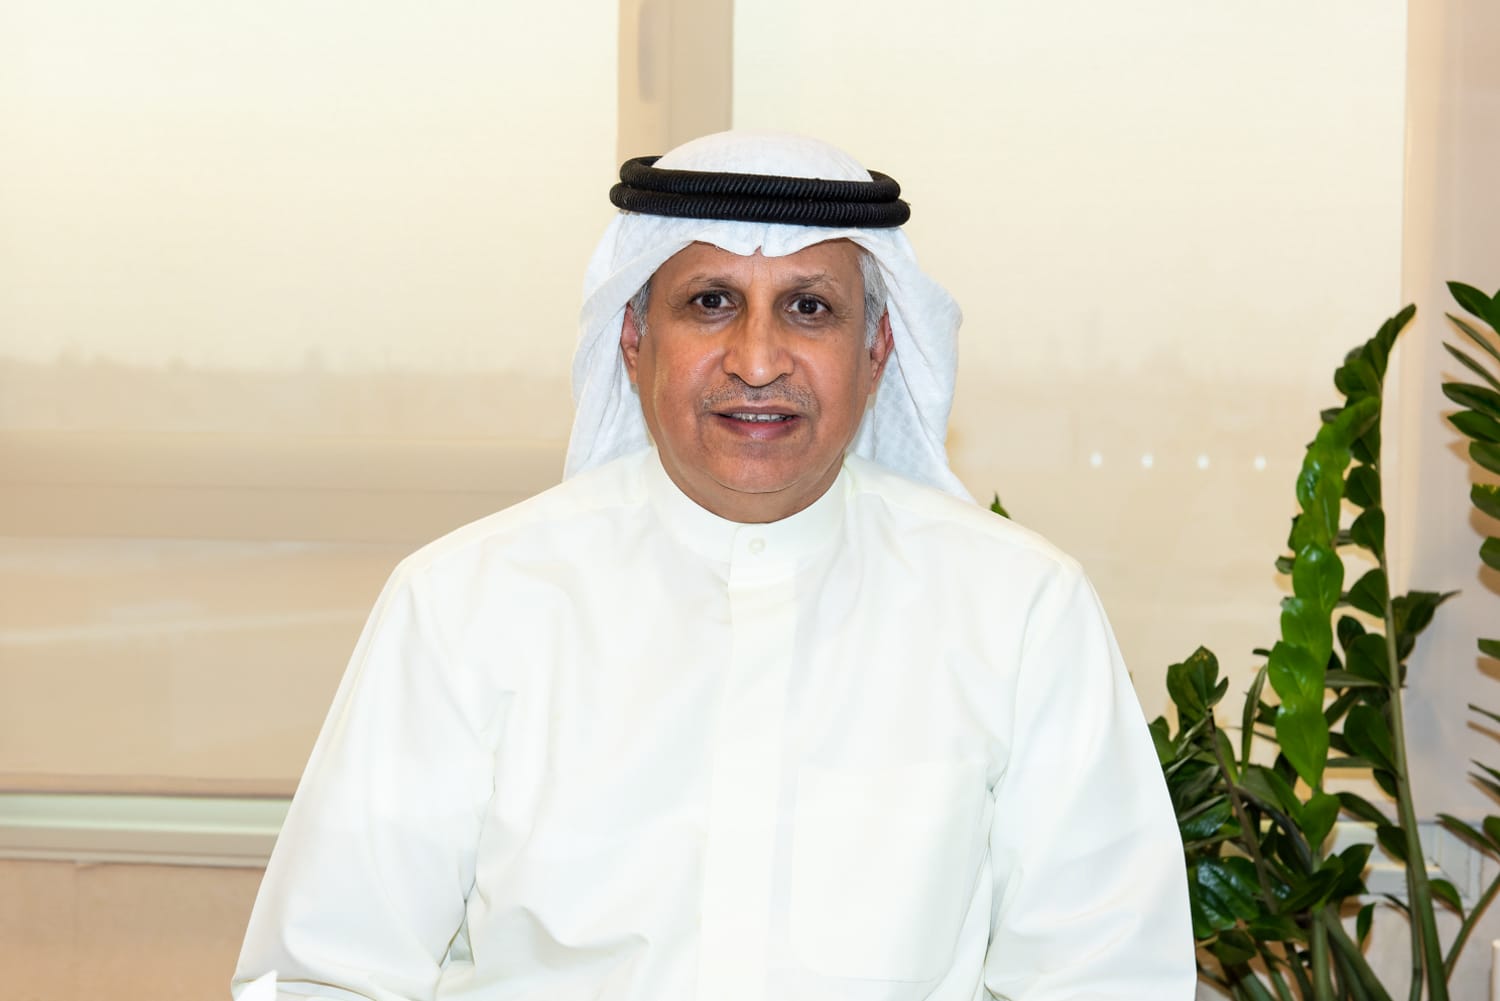 acting Director General of the office Salah Al-Awfan